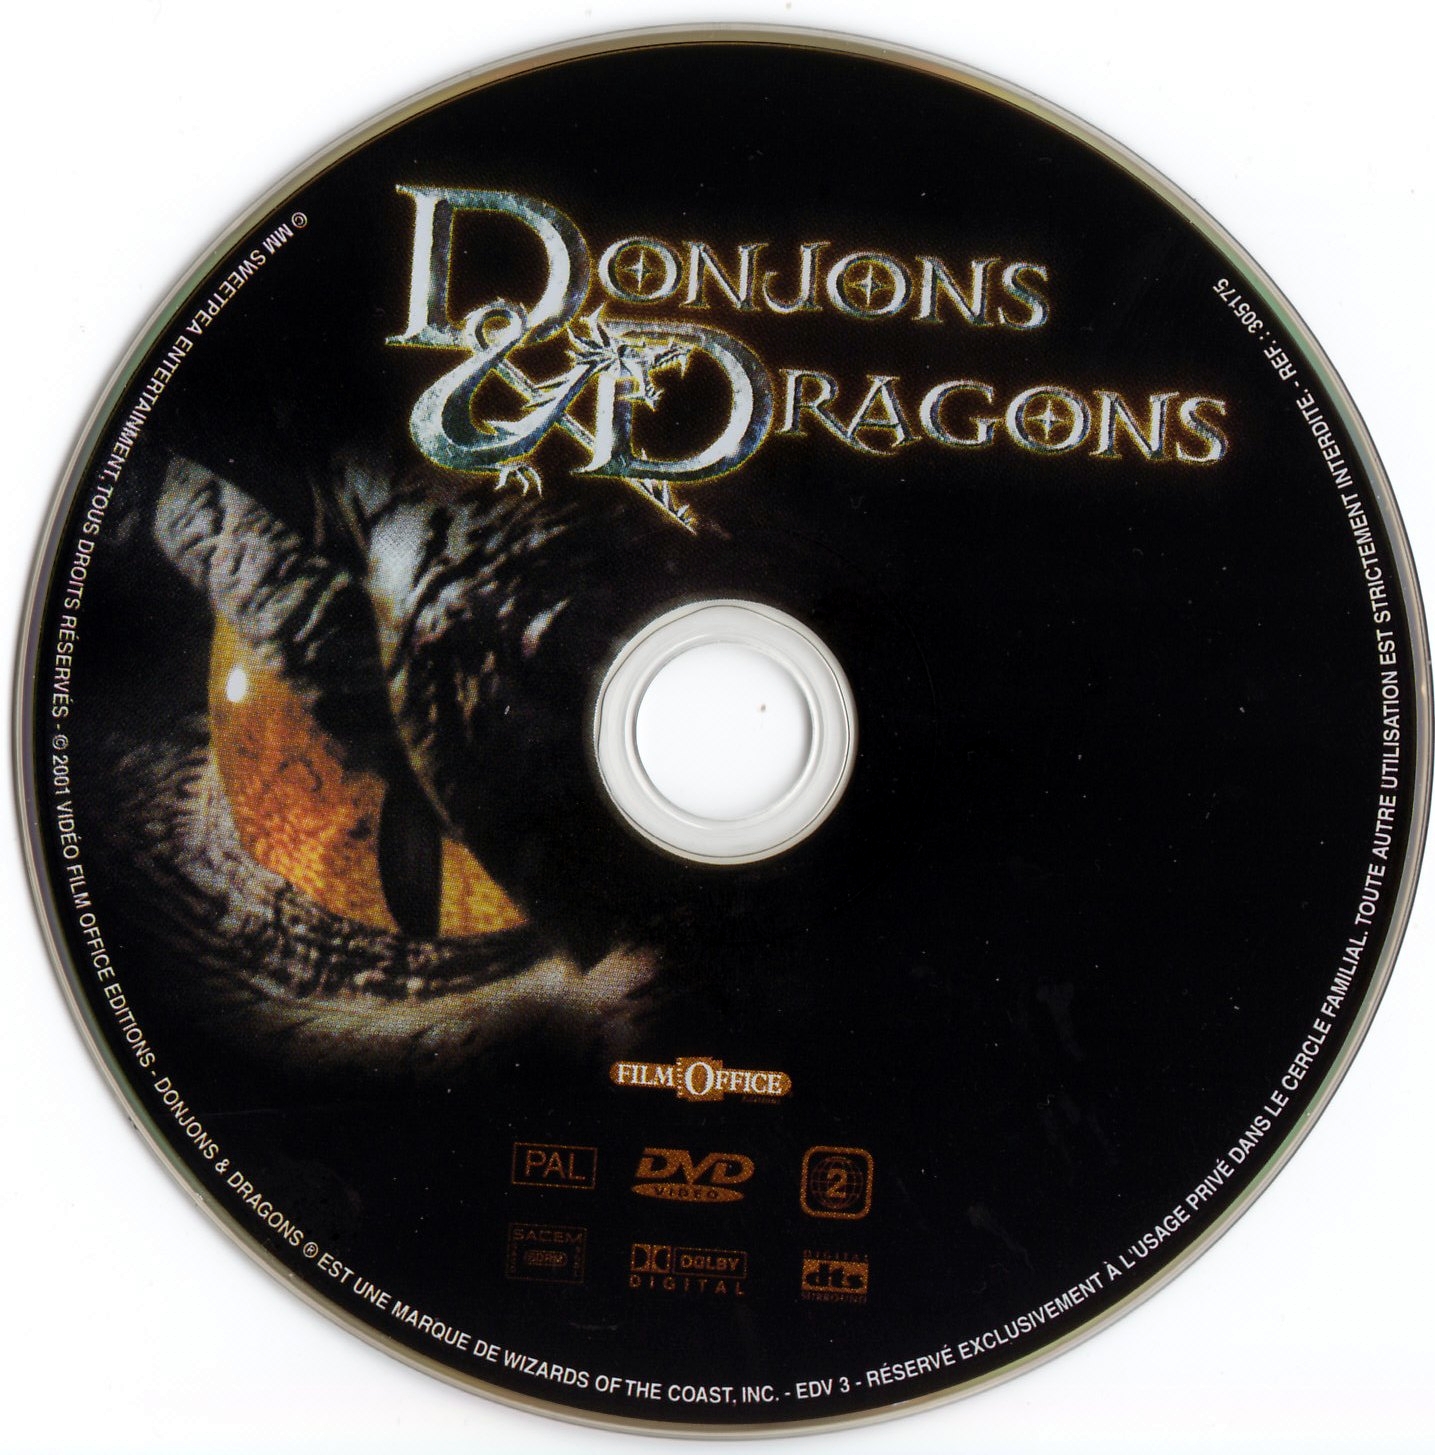 Donjons et dragons DISC 1